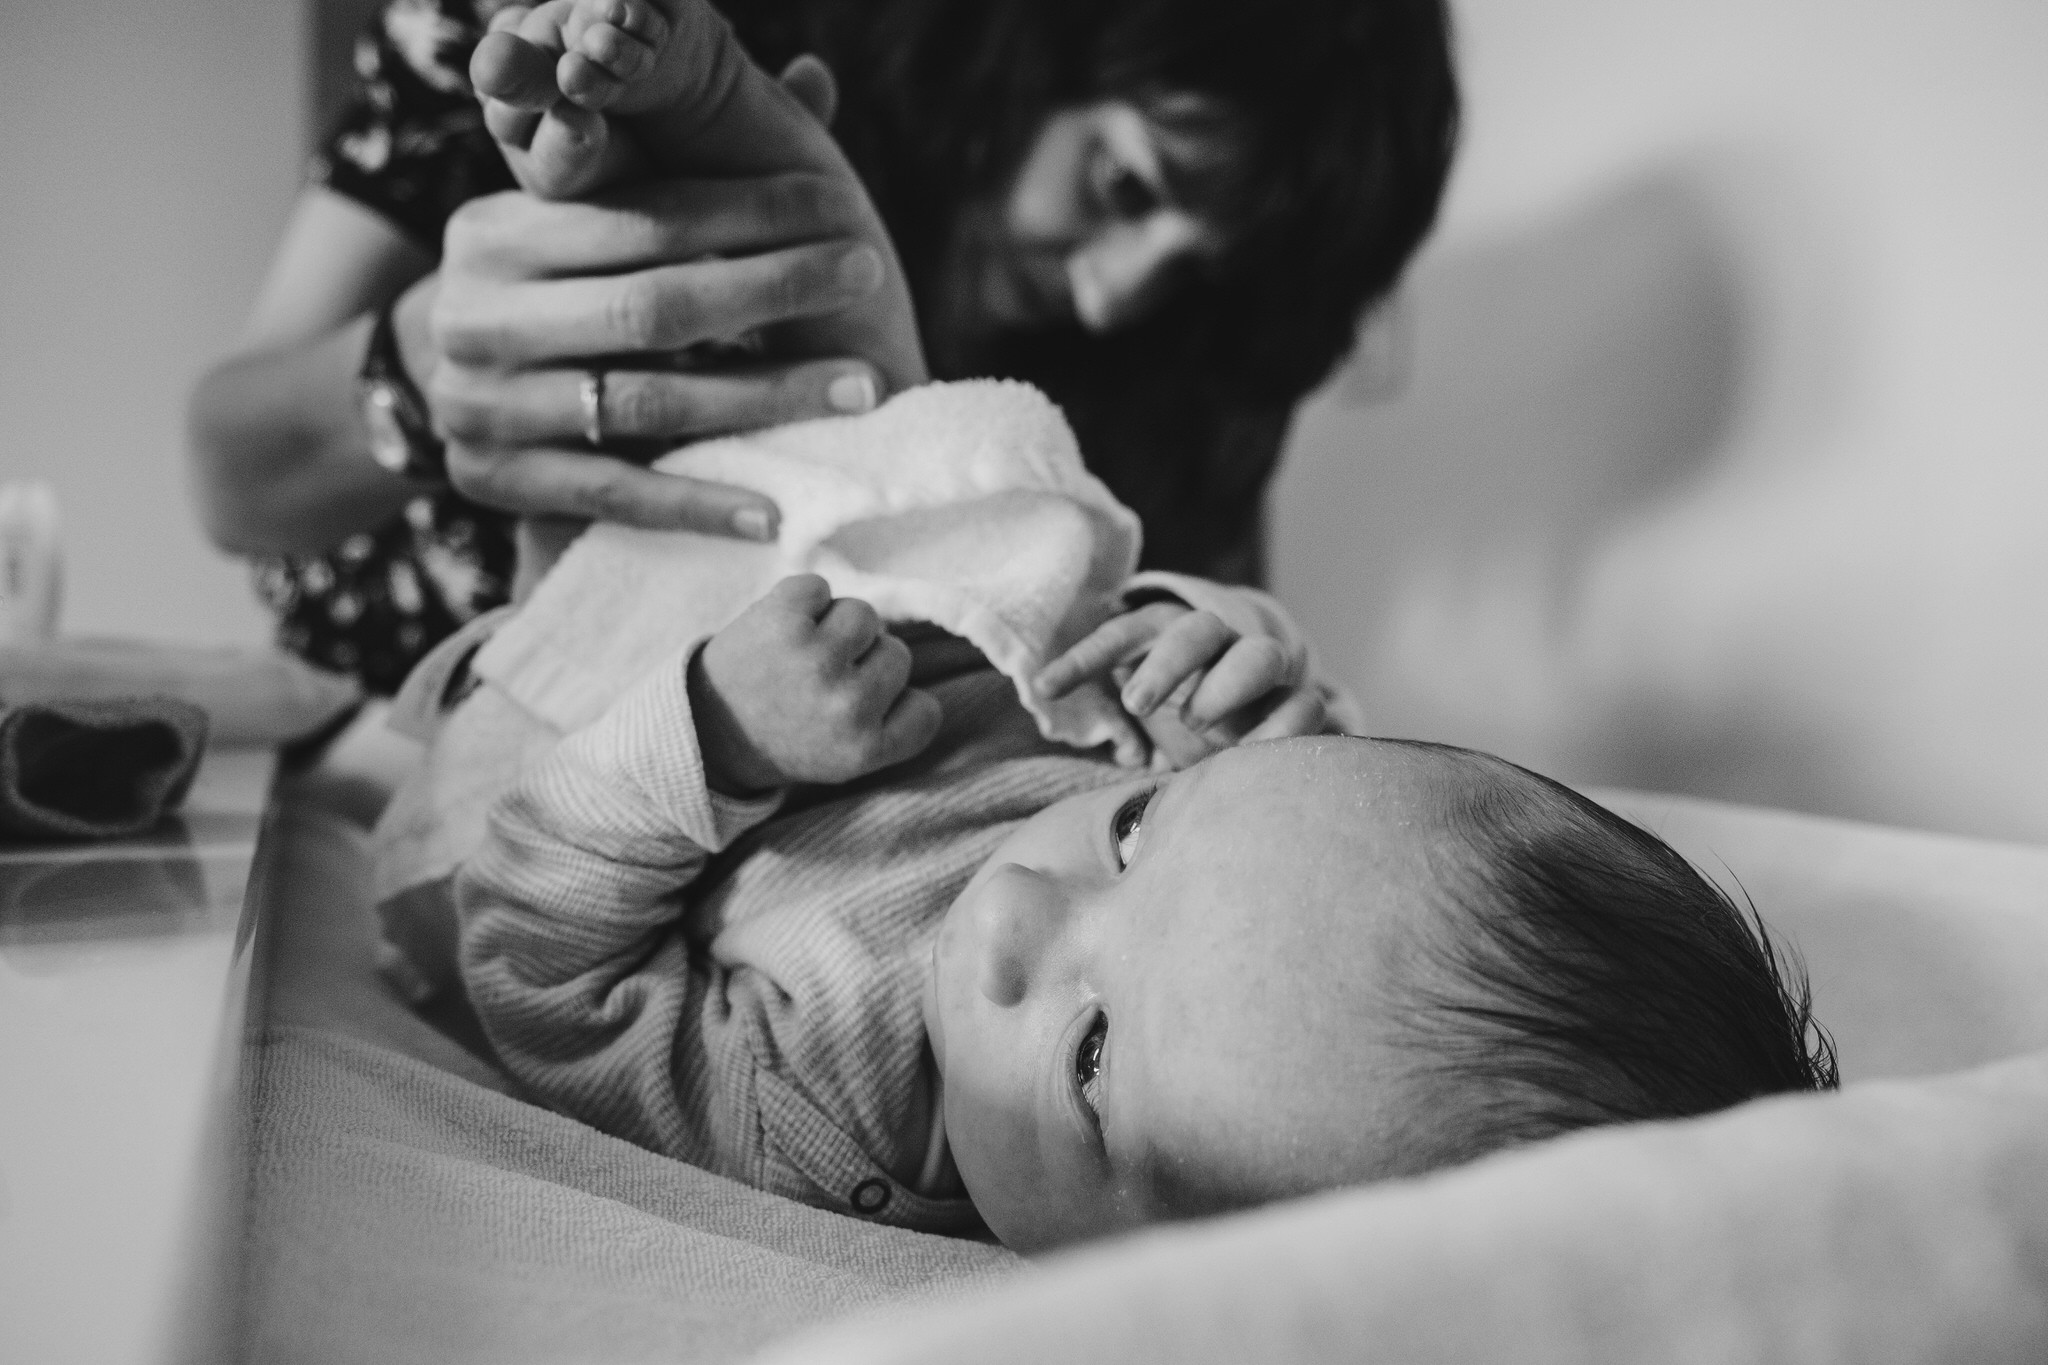   Mil newborn stijn willems photography heverlee